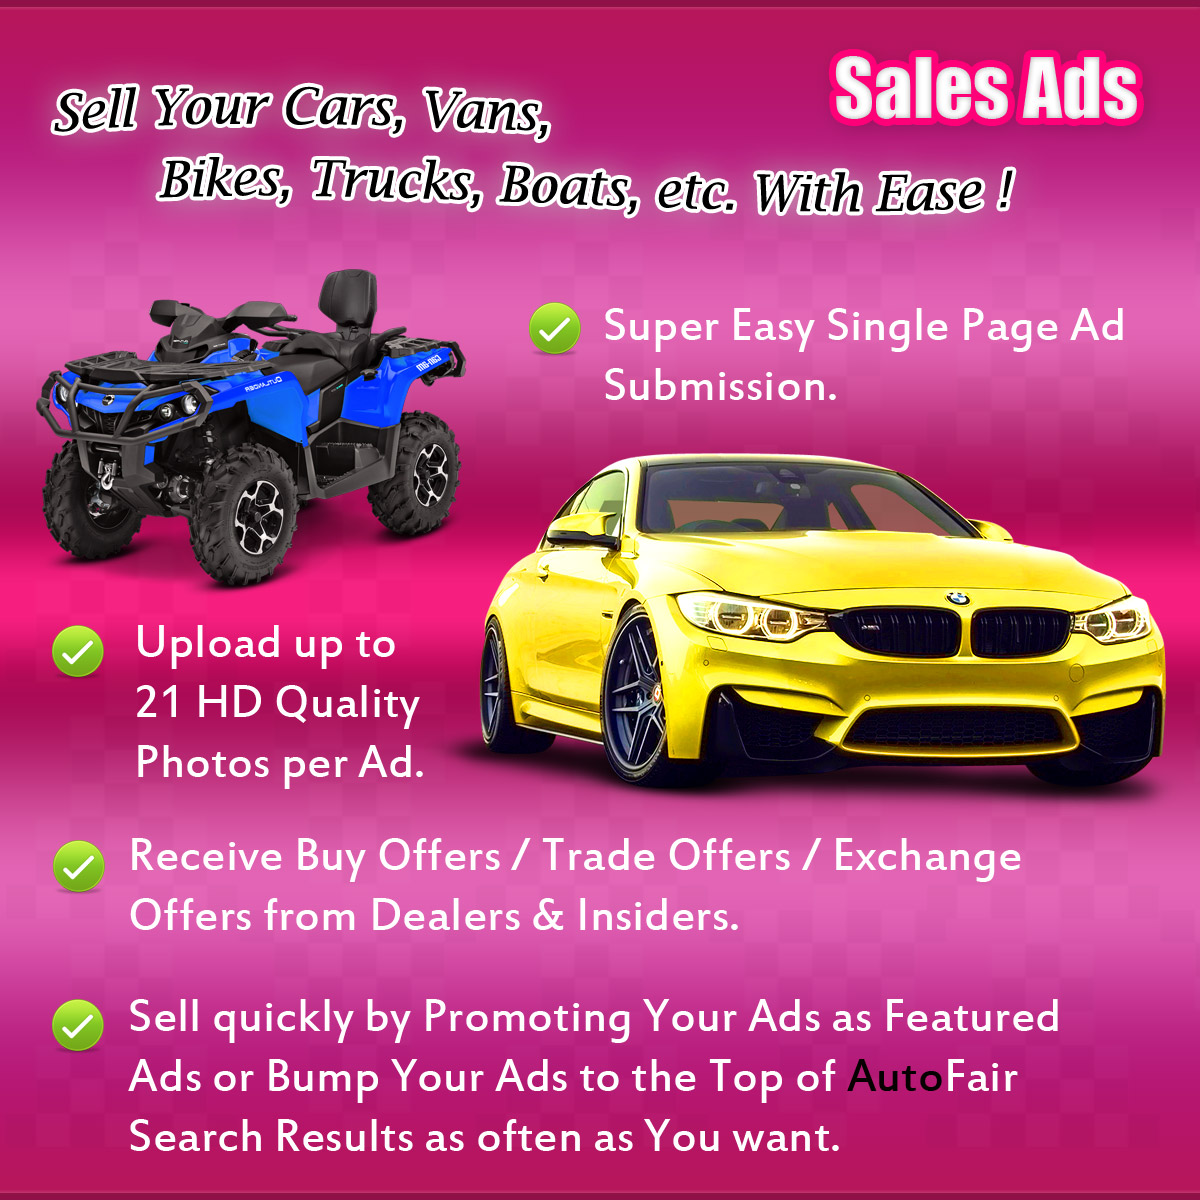 Sales Ads